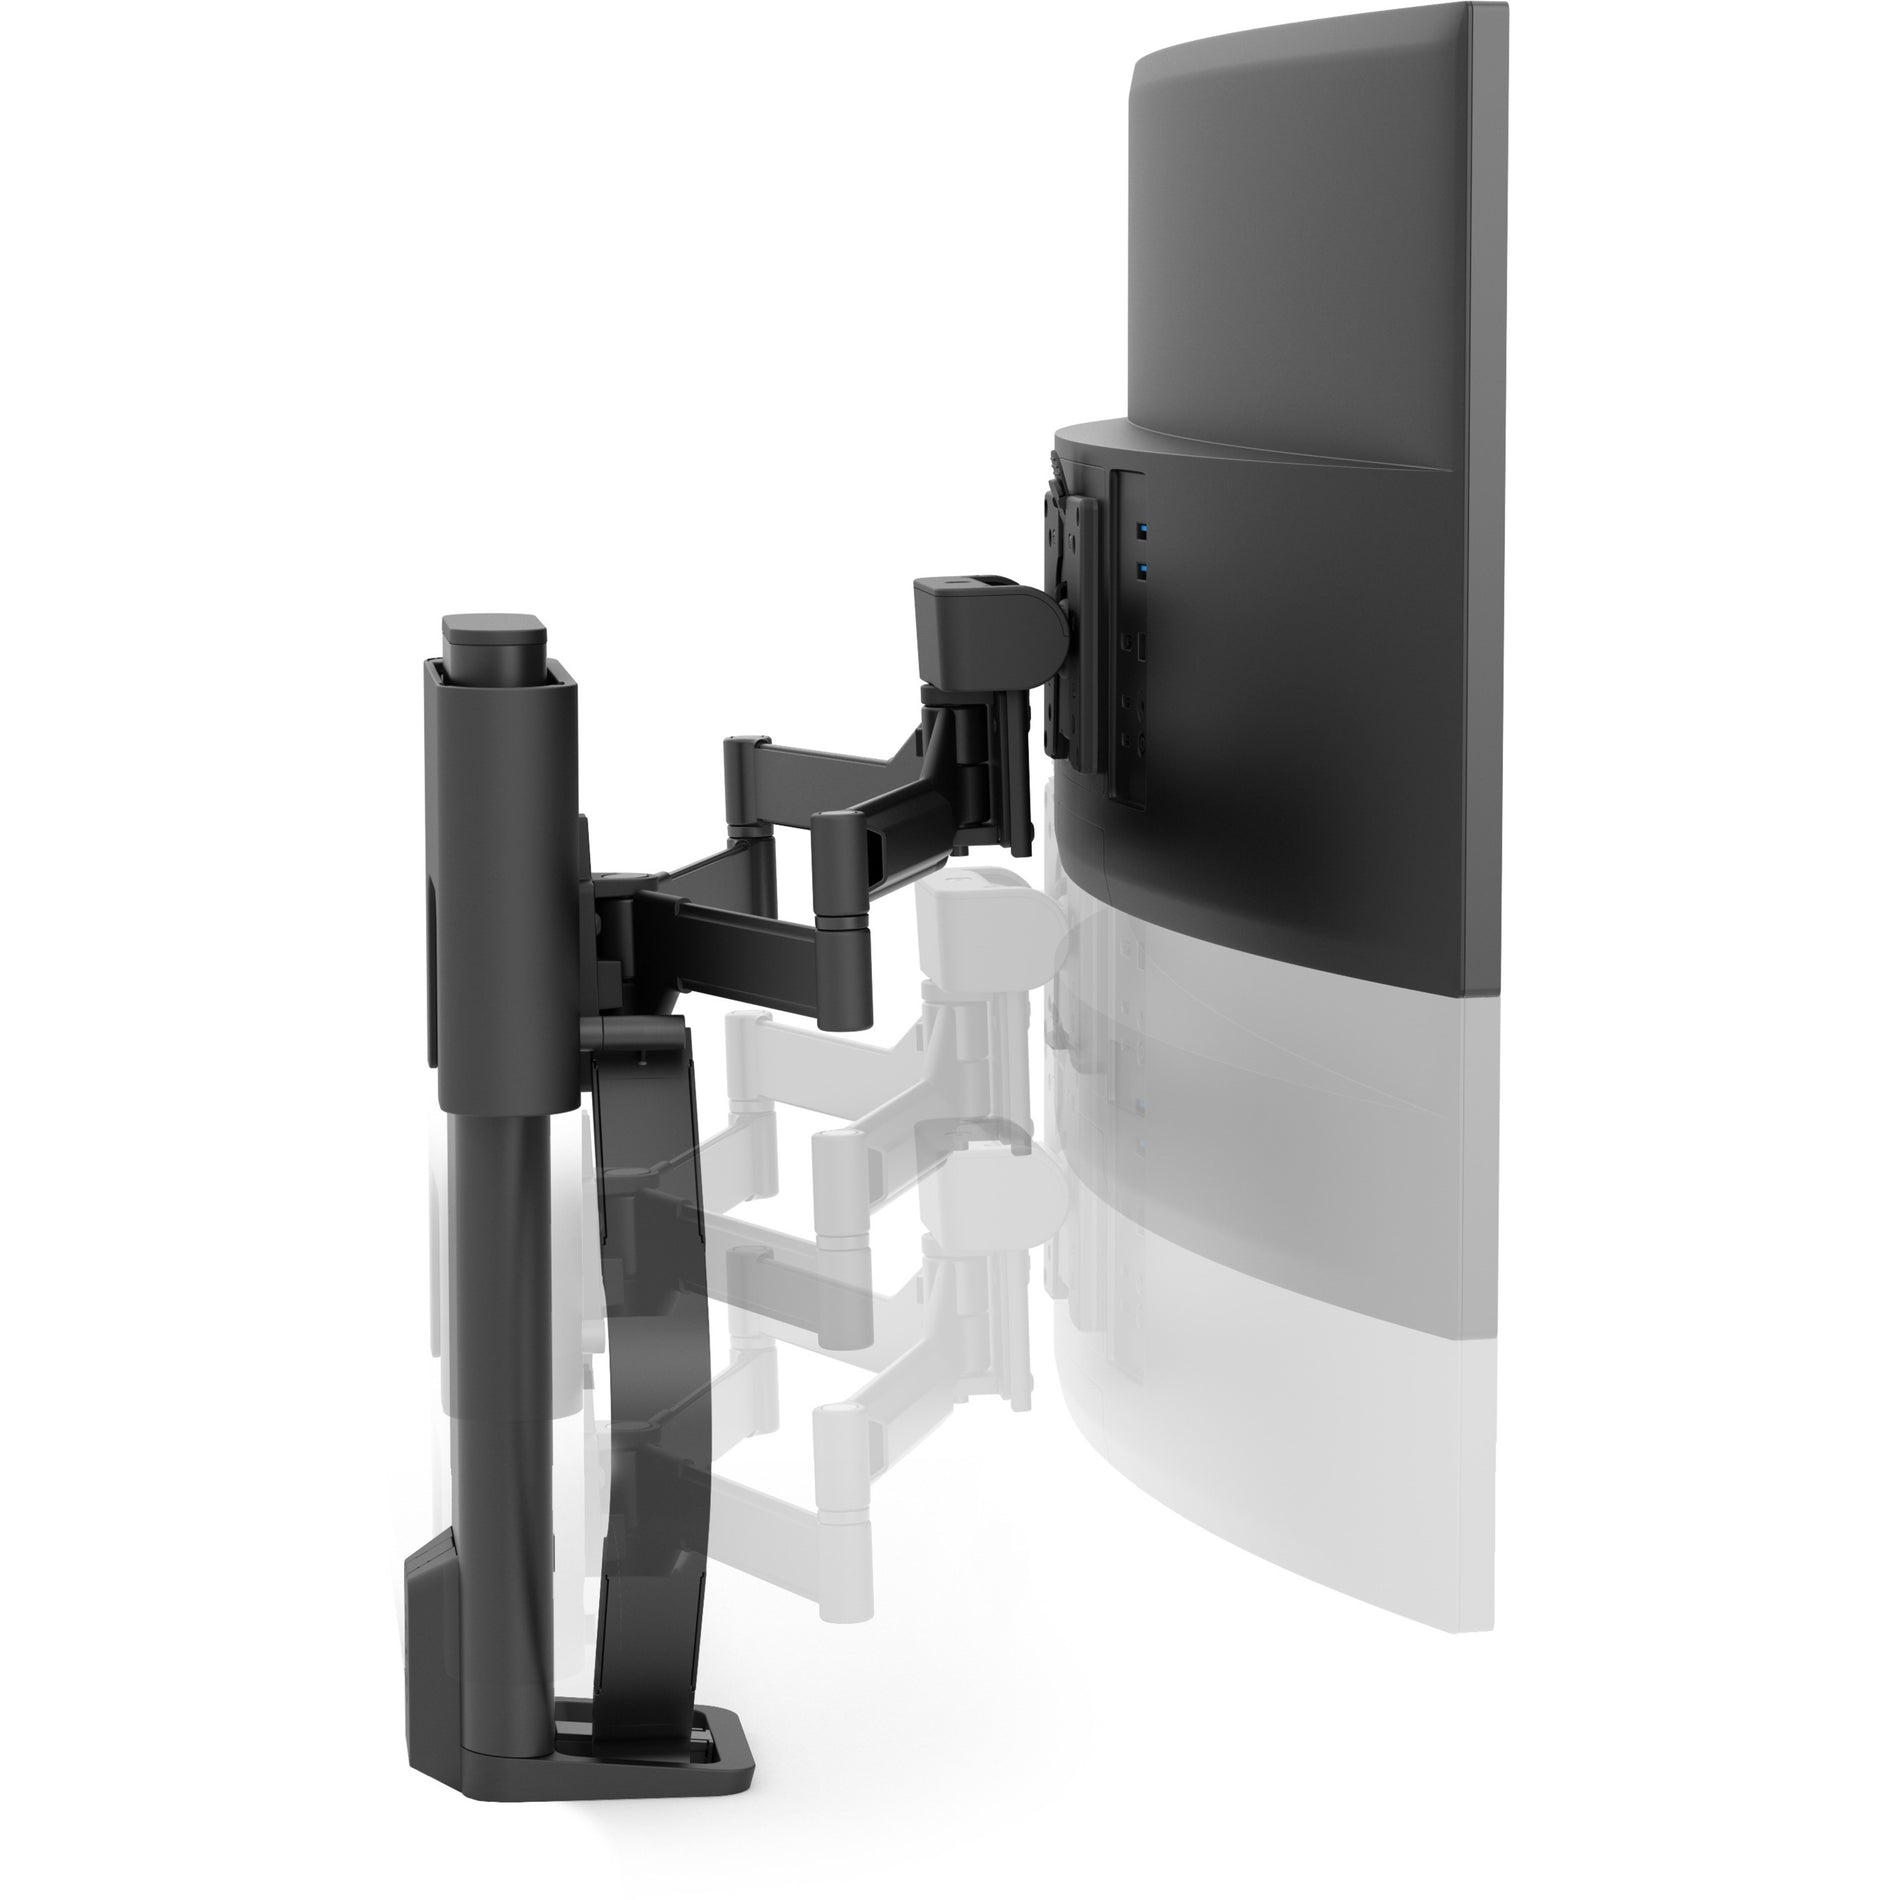 Ergotron TRACE Desk Mount for Monitor, LCD Display - Matte Black (45-630-224)